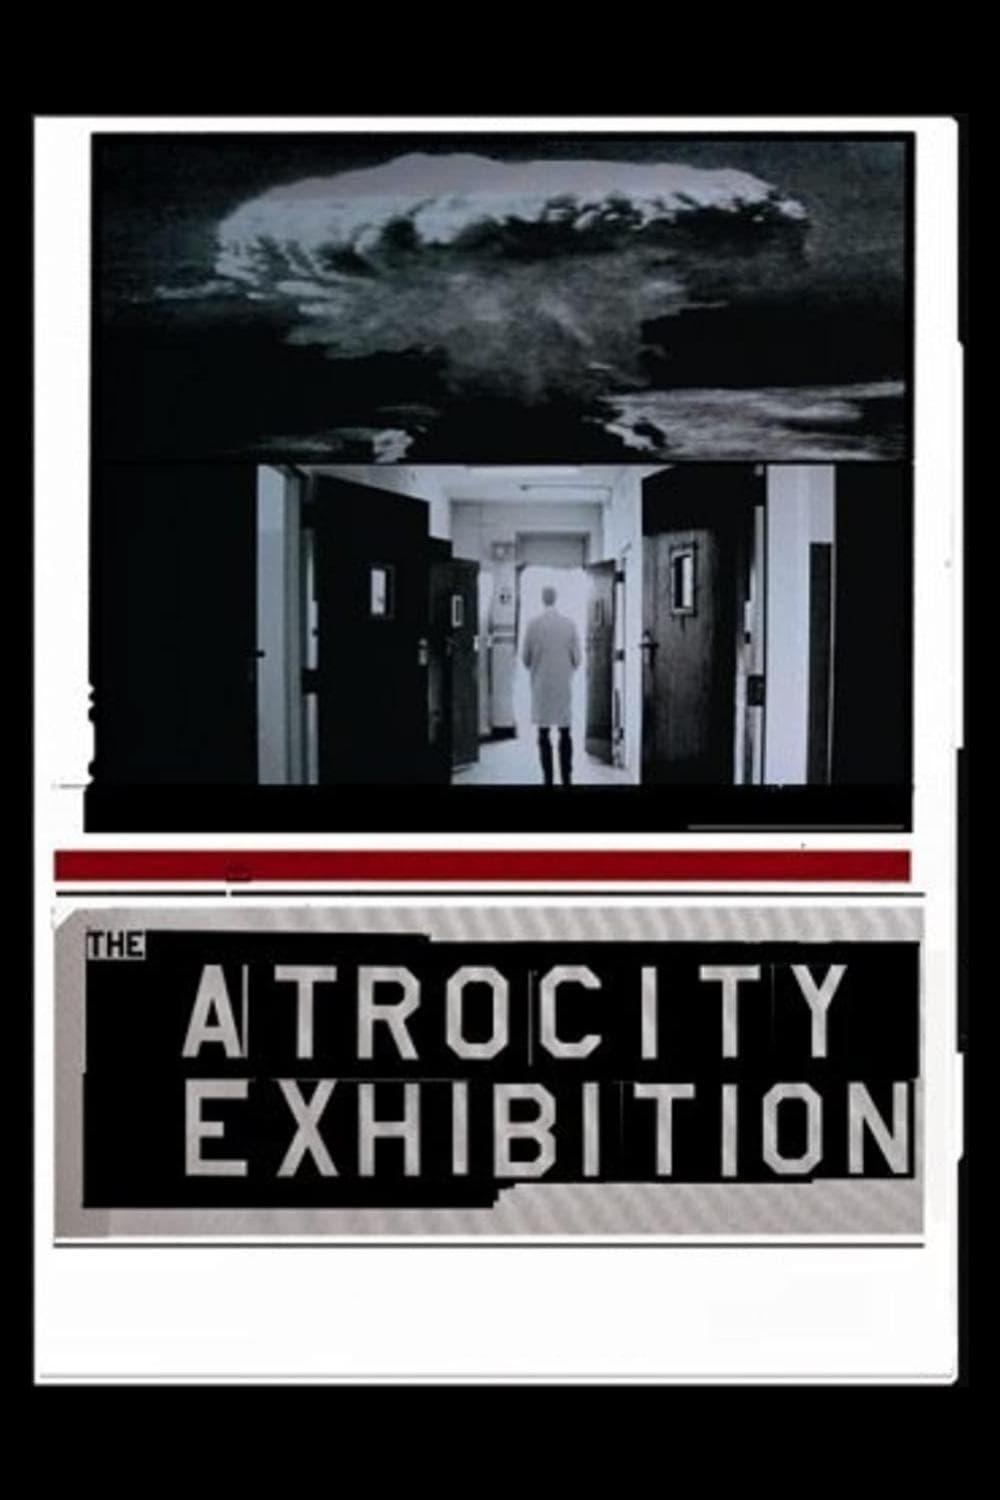 The Atrocity Exhibition poster